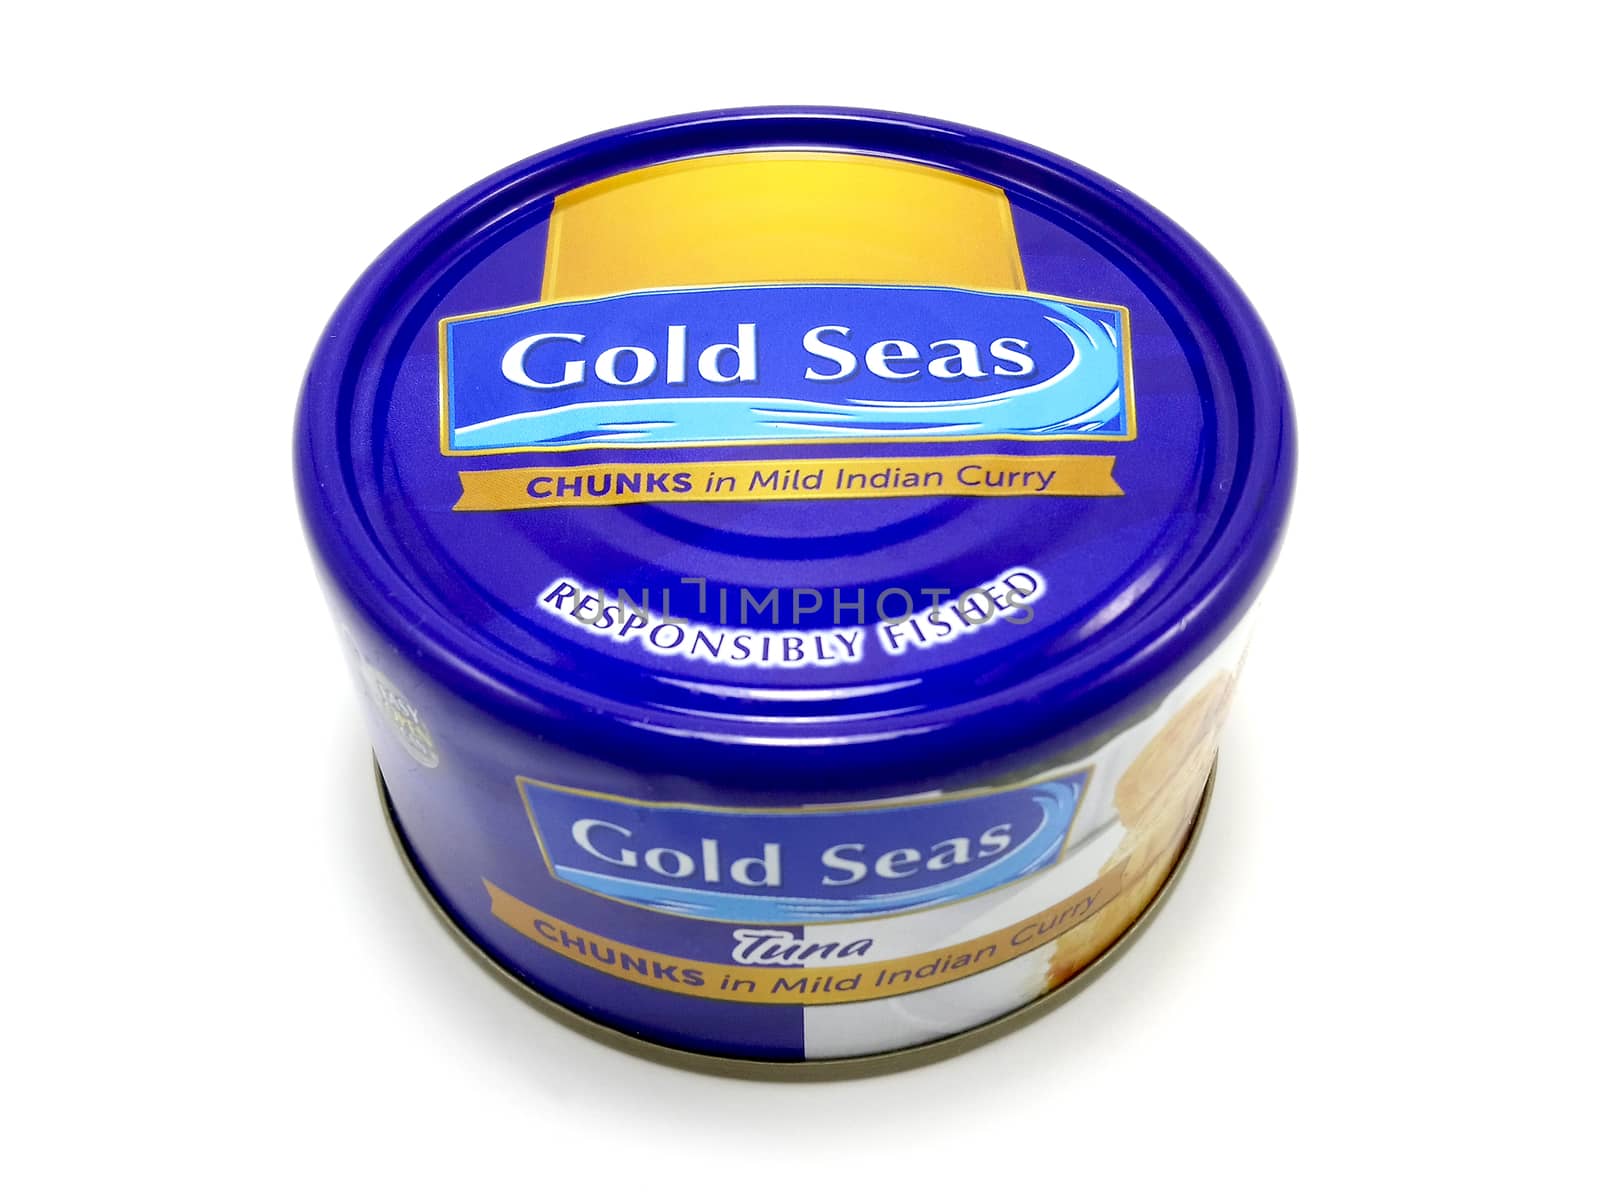 MANILA, PH - JUNE 23 - Gold seas tuna chunks mild Indian curry can on June 23, 2020 in Manila, Philippines.